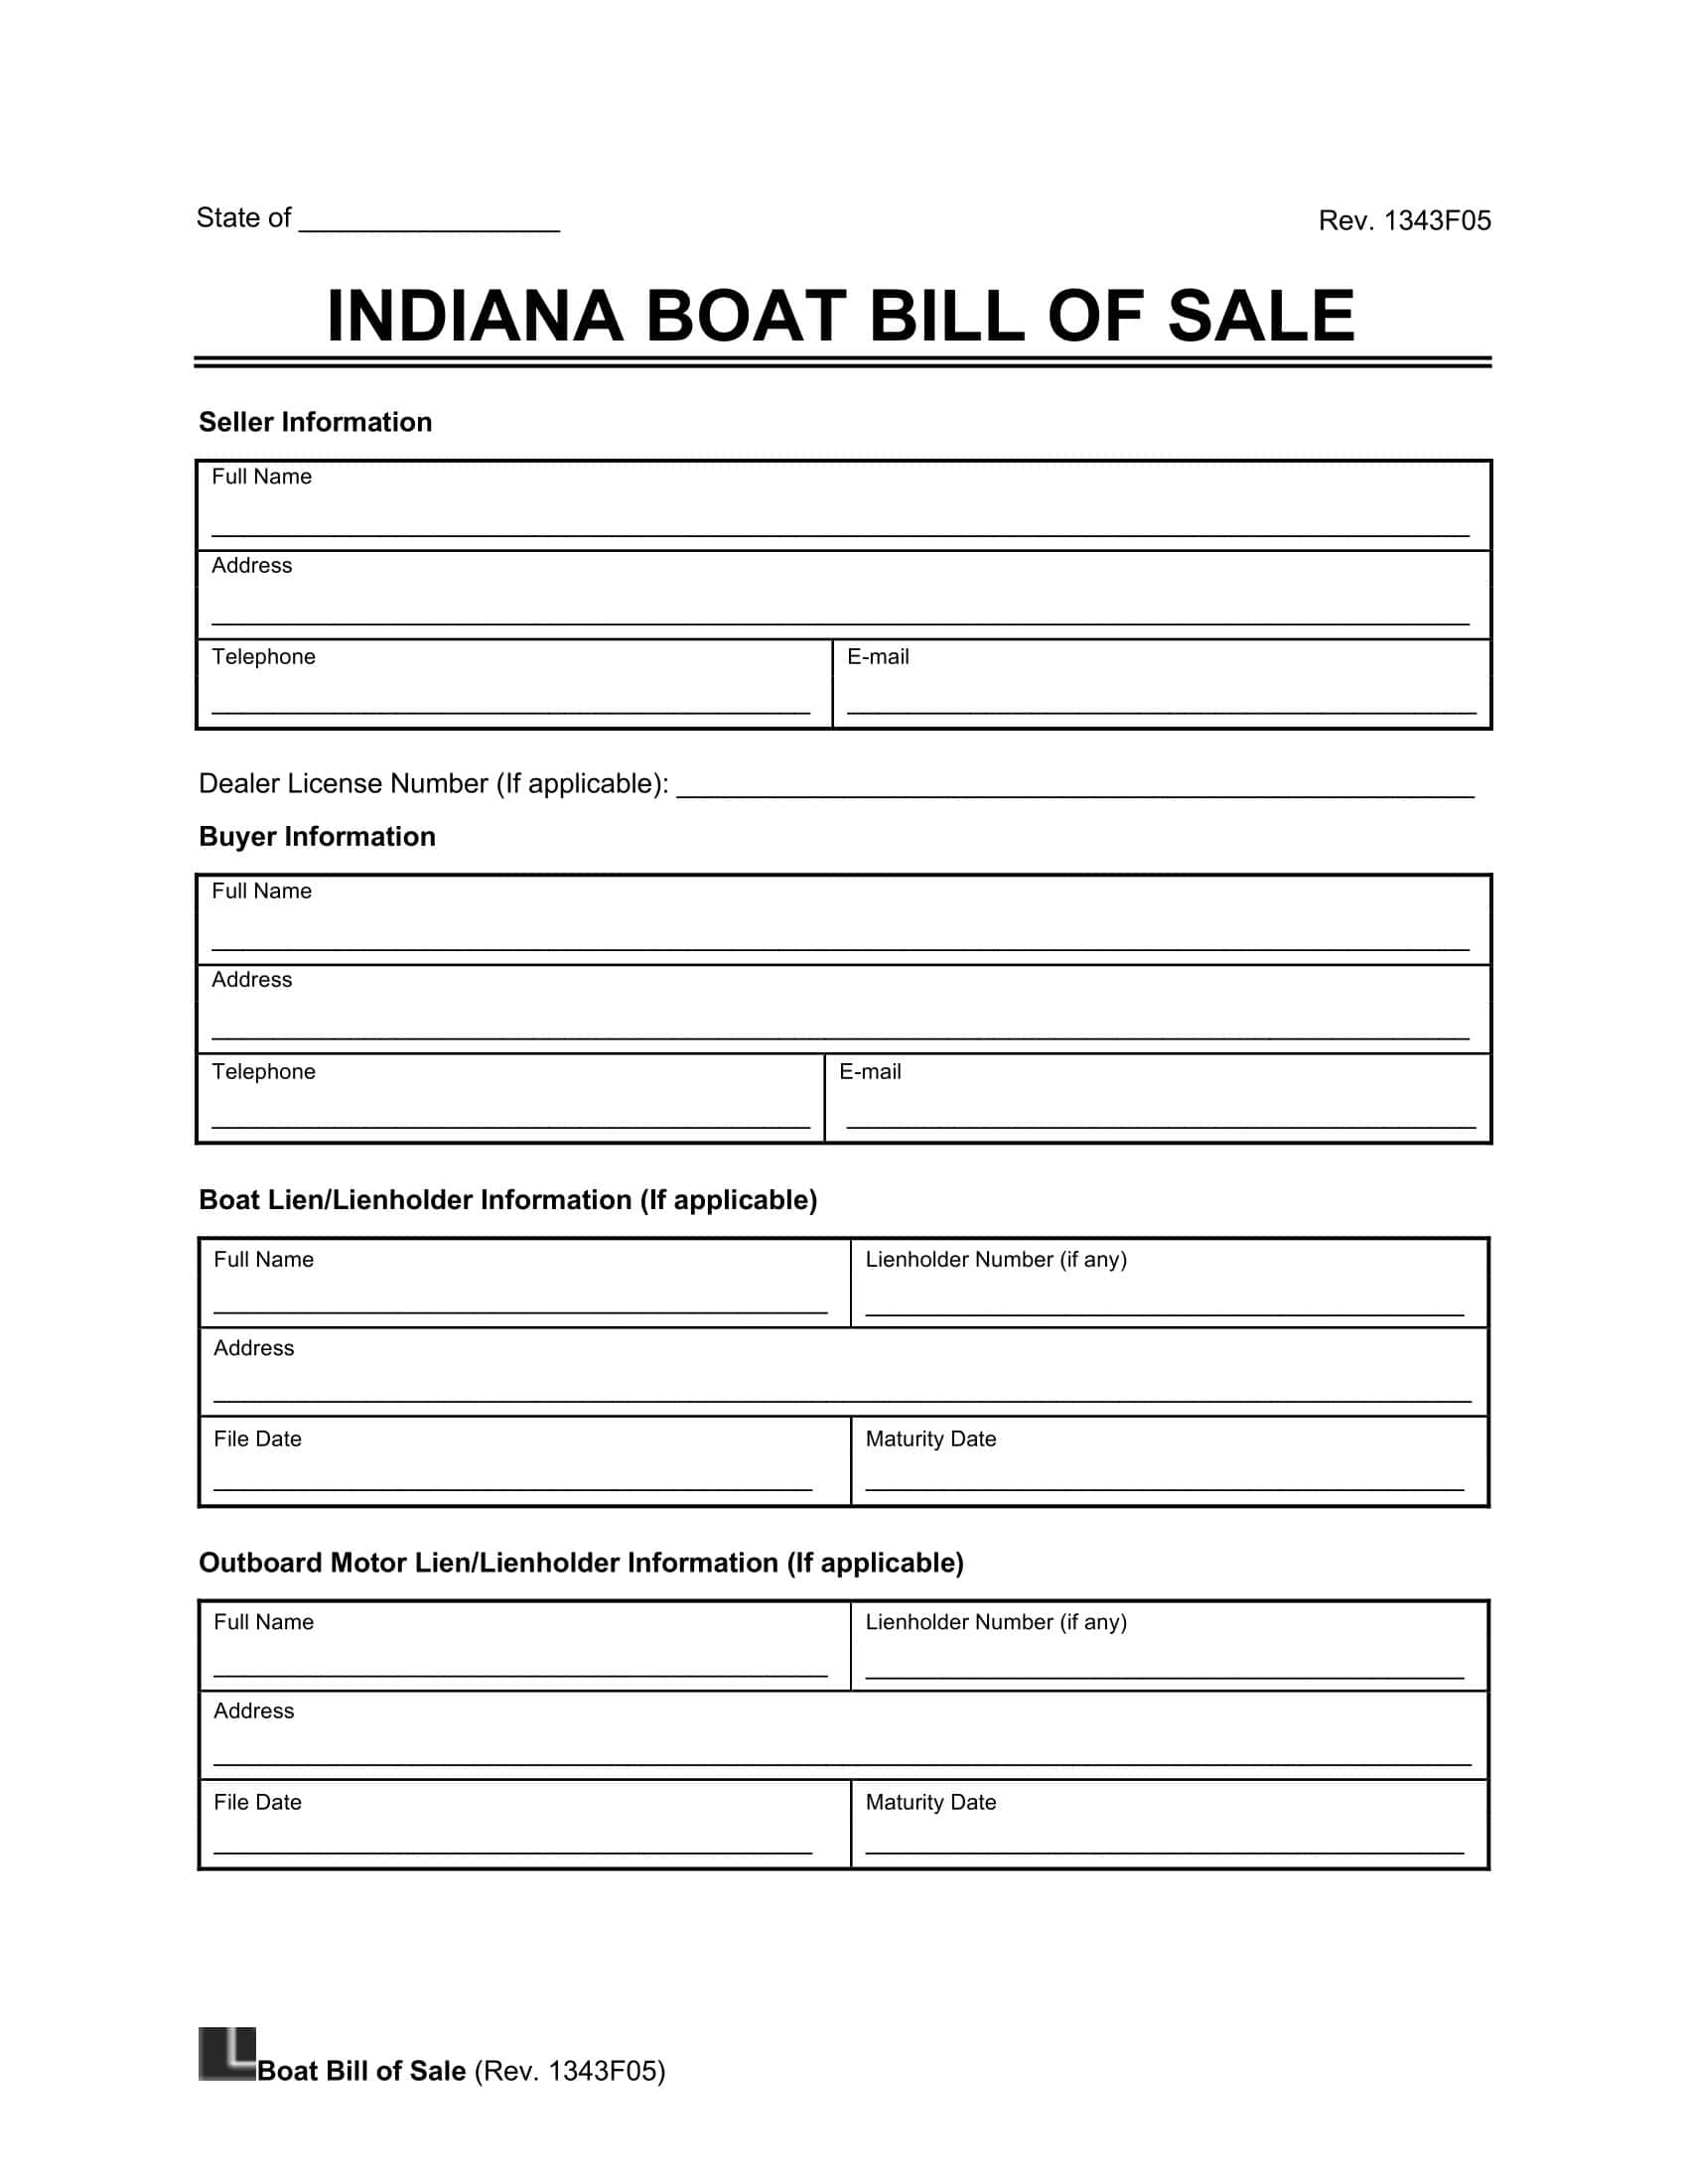 Indiana boat bill of sale screenshot